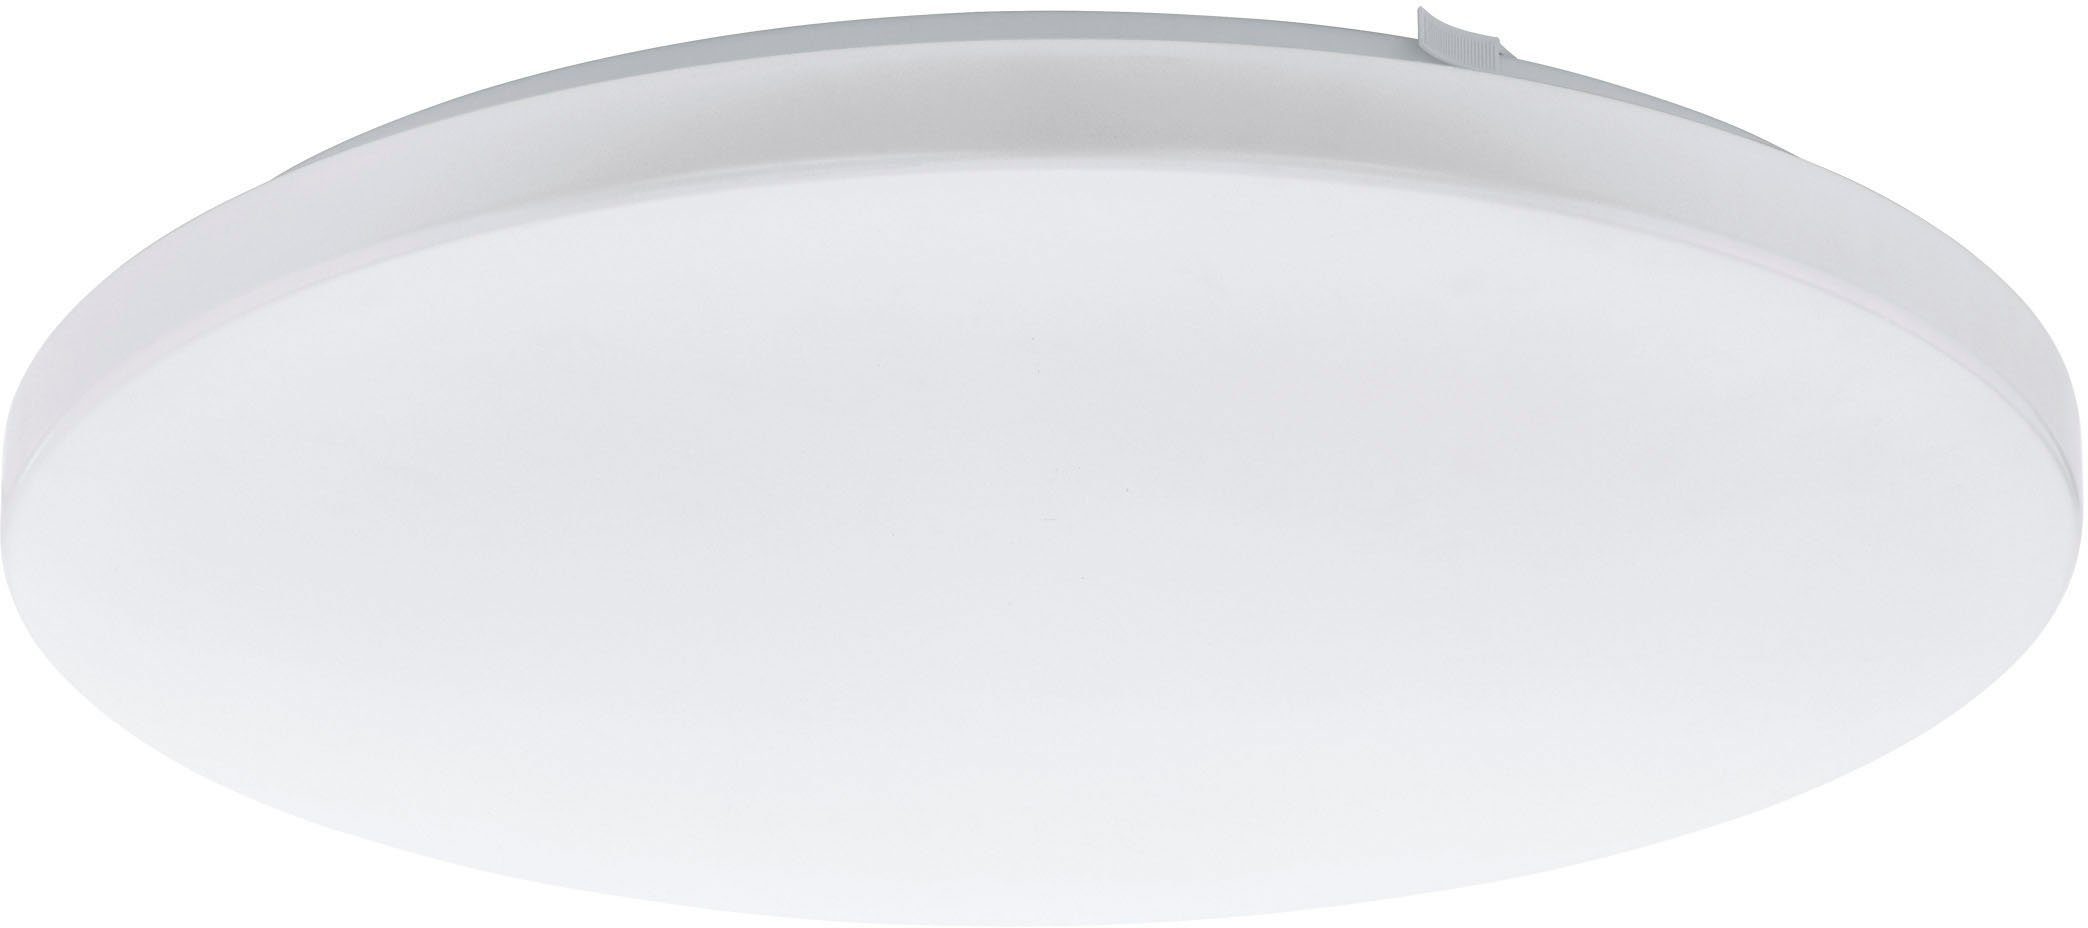 EGLO Plafondlamp FRANIA wit / ø43 x h7 cm / inclusief 1x led-plank (elk 32w, 3900lm, 3000k) / warm wit licht - plafondlamp - slaapkamerlamp - bureaulamp - lamp - slaapkamer - keuke